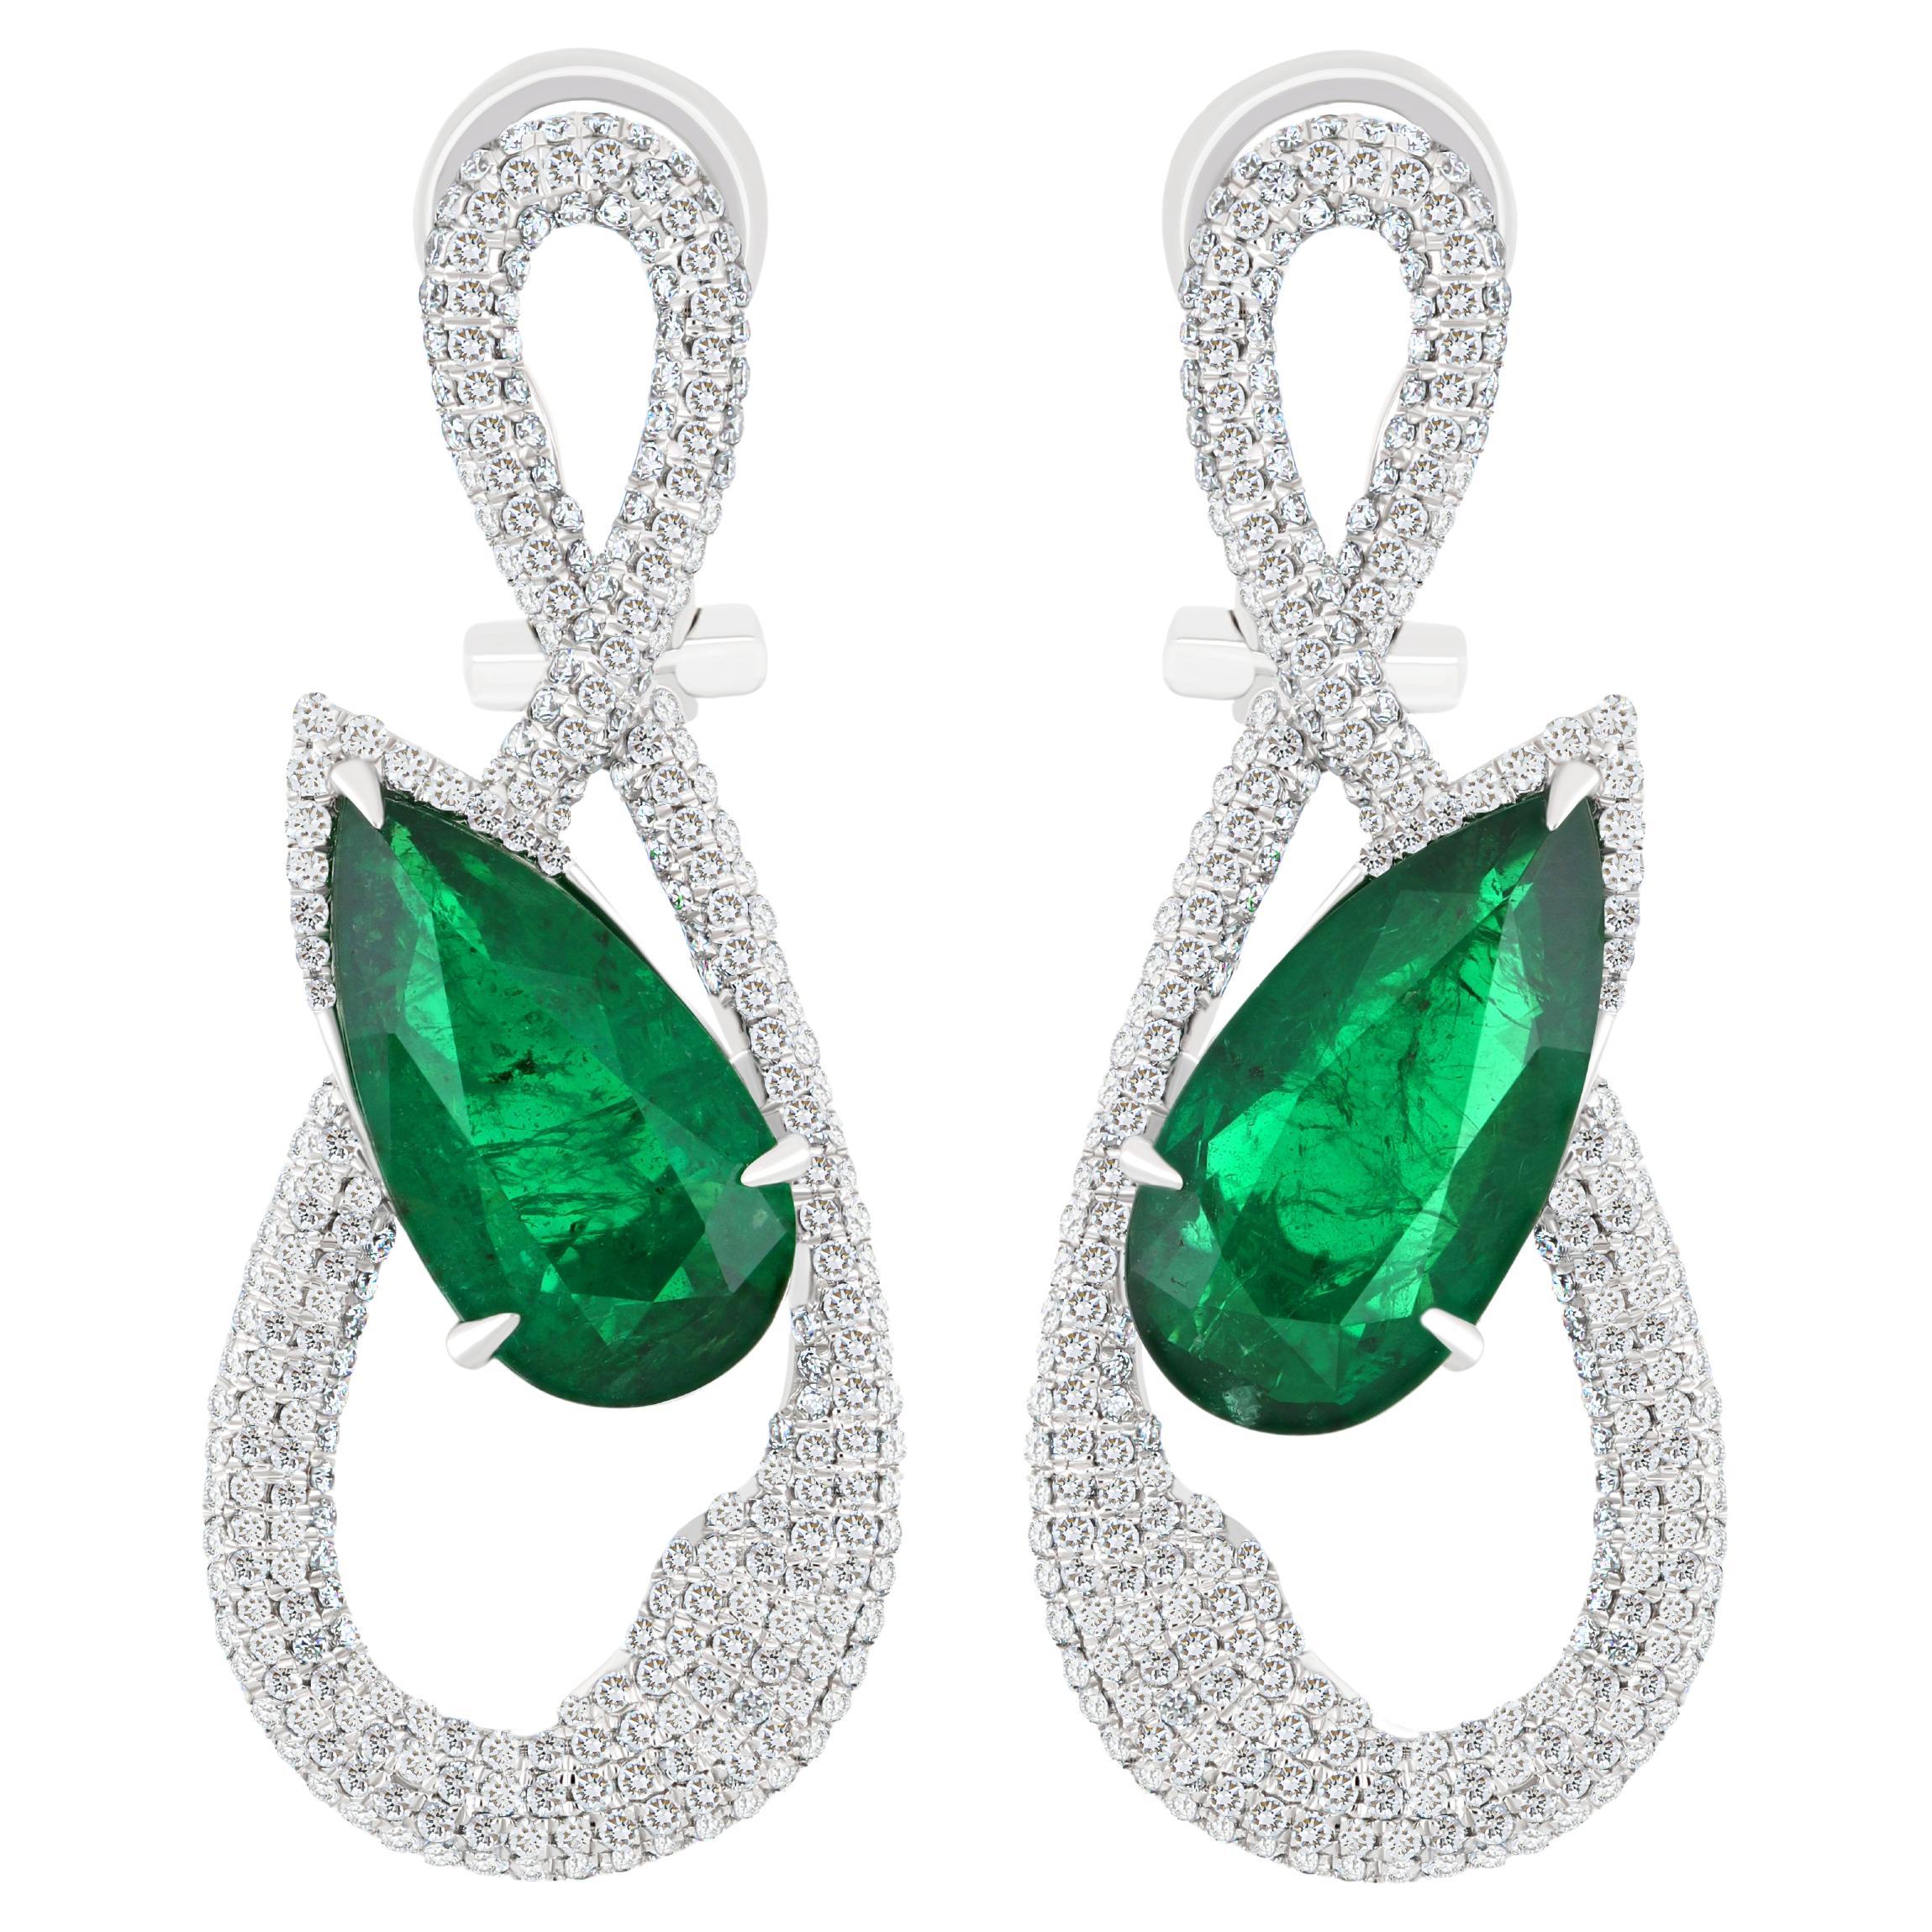  7.56Cts Emerald & Diamond Earring in 18k White Gold for Charismas Gift Earring 